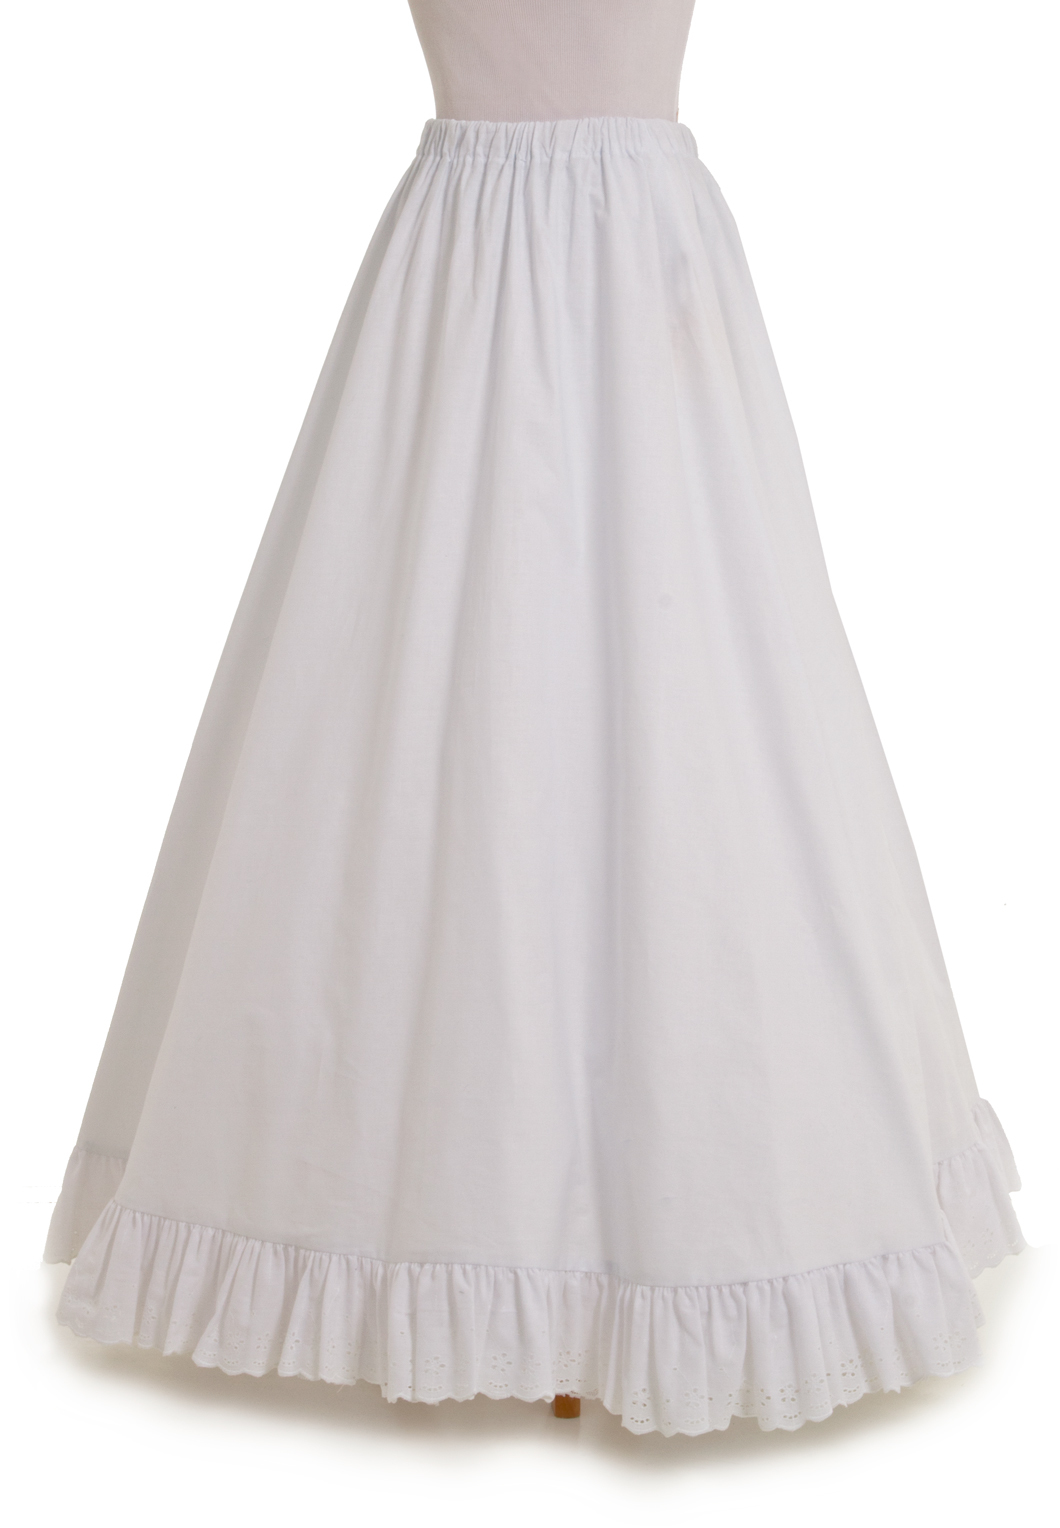 Clearance Petticoat - White - S, 40